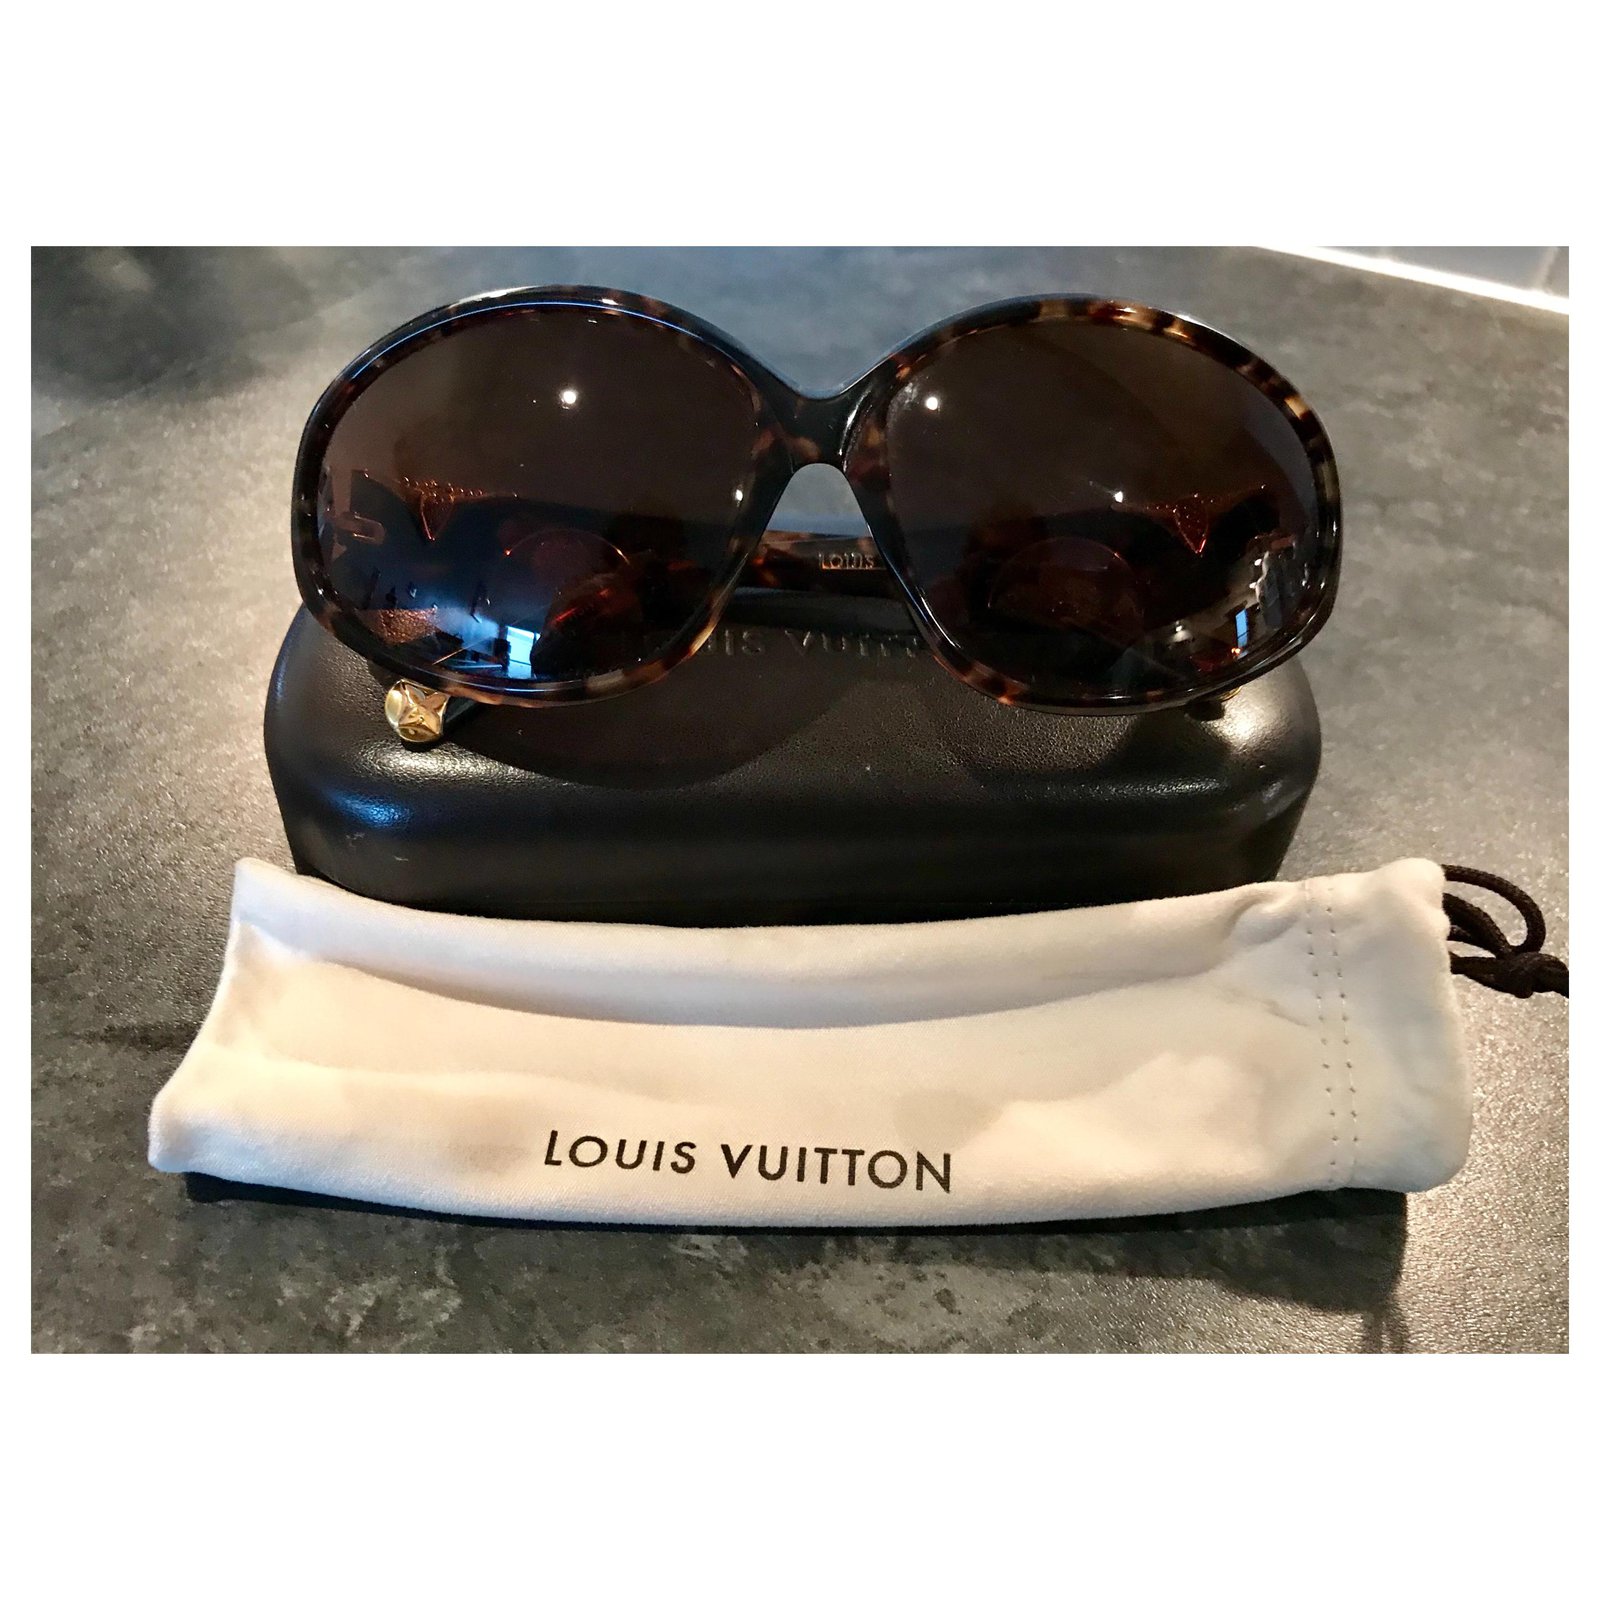 Darling Jordan dress, Oakley mirror sunglasses, Louis Vuitton